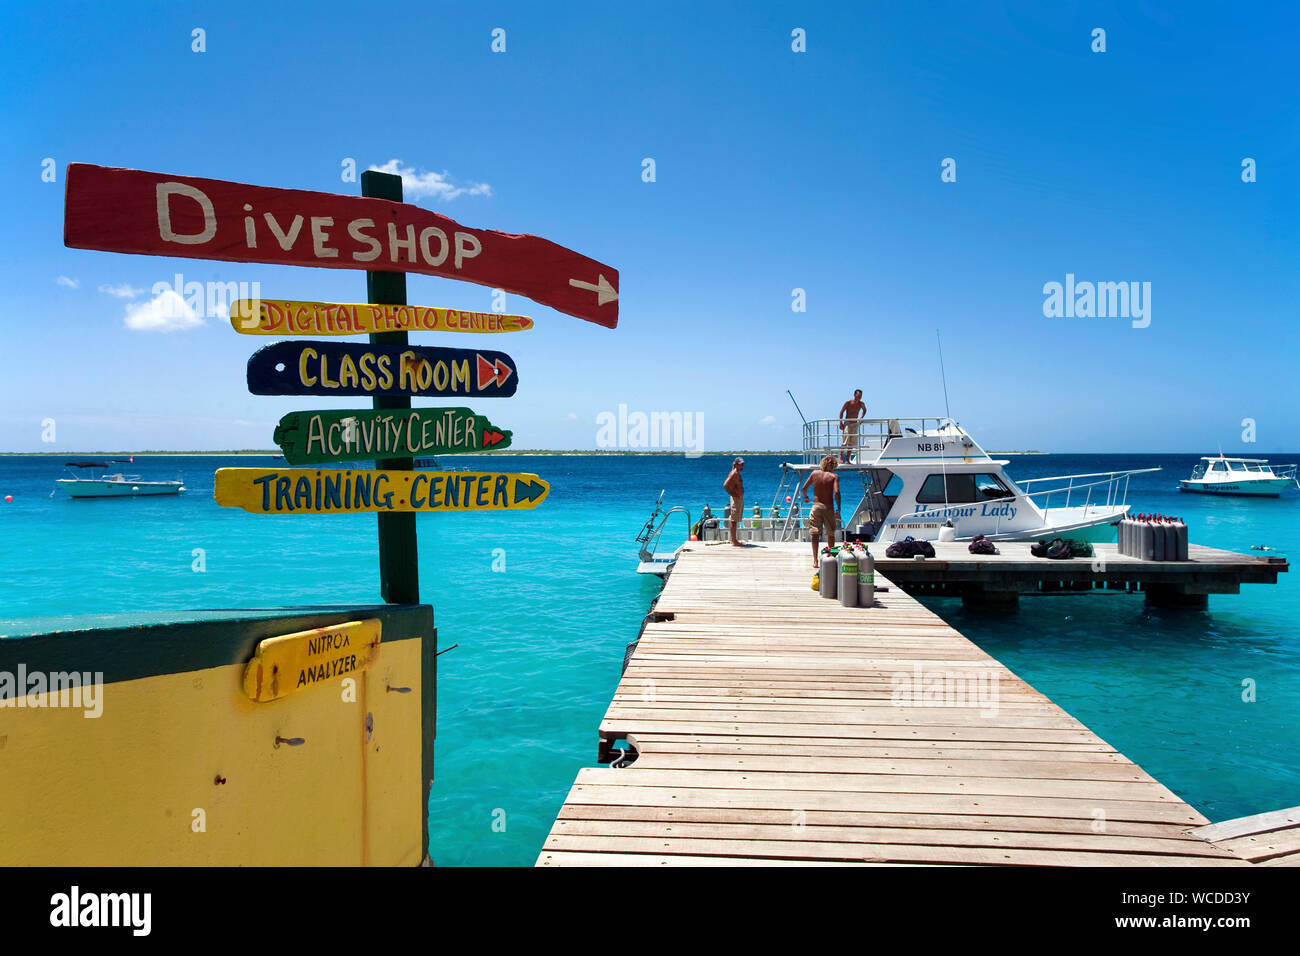 Pier at Buddy Dive Resort, popular Dive resort on Bonaire, Netherland Antilles Stock Photo